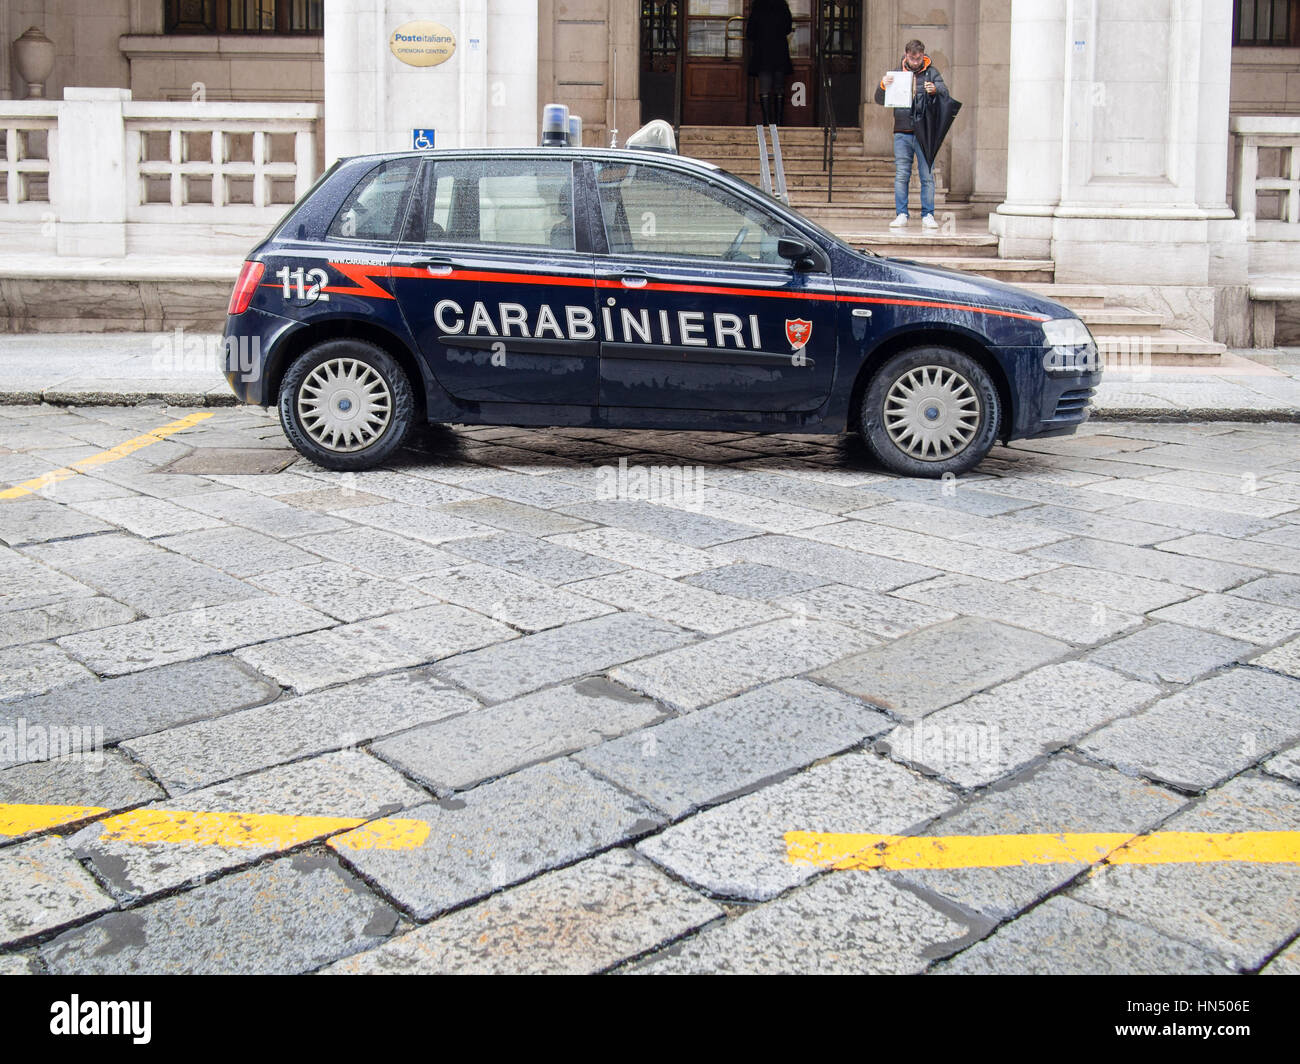 Carabinieri italienischen Fiat Polizeistreife. Stockfoto